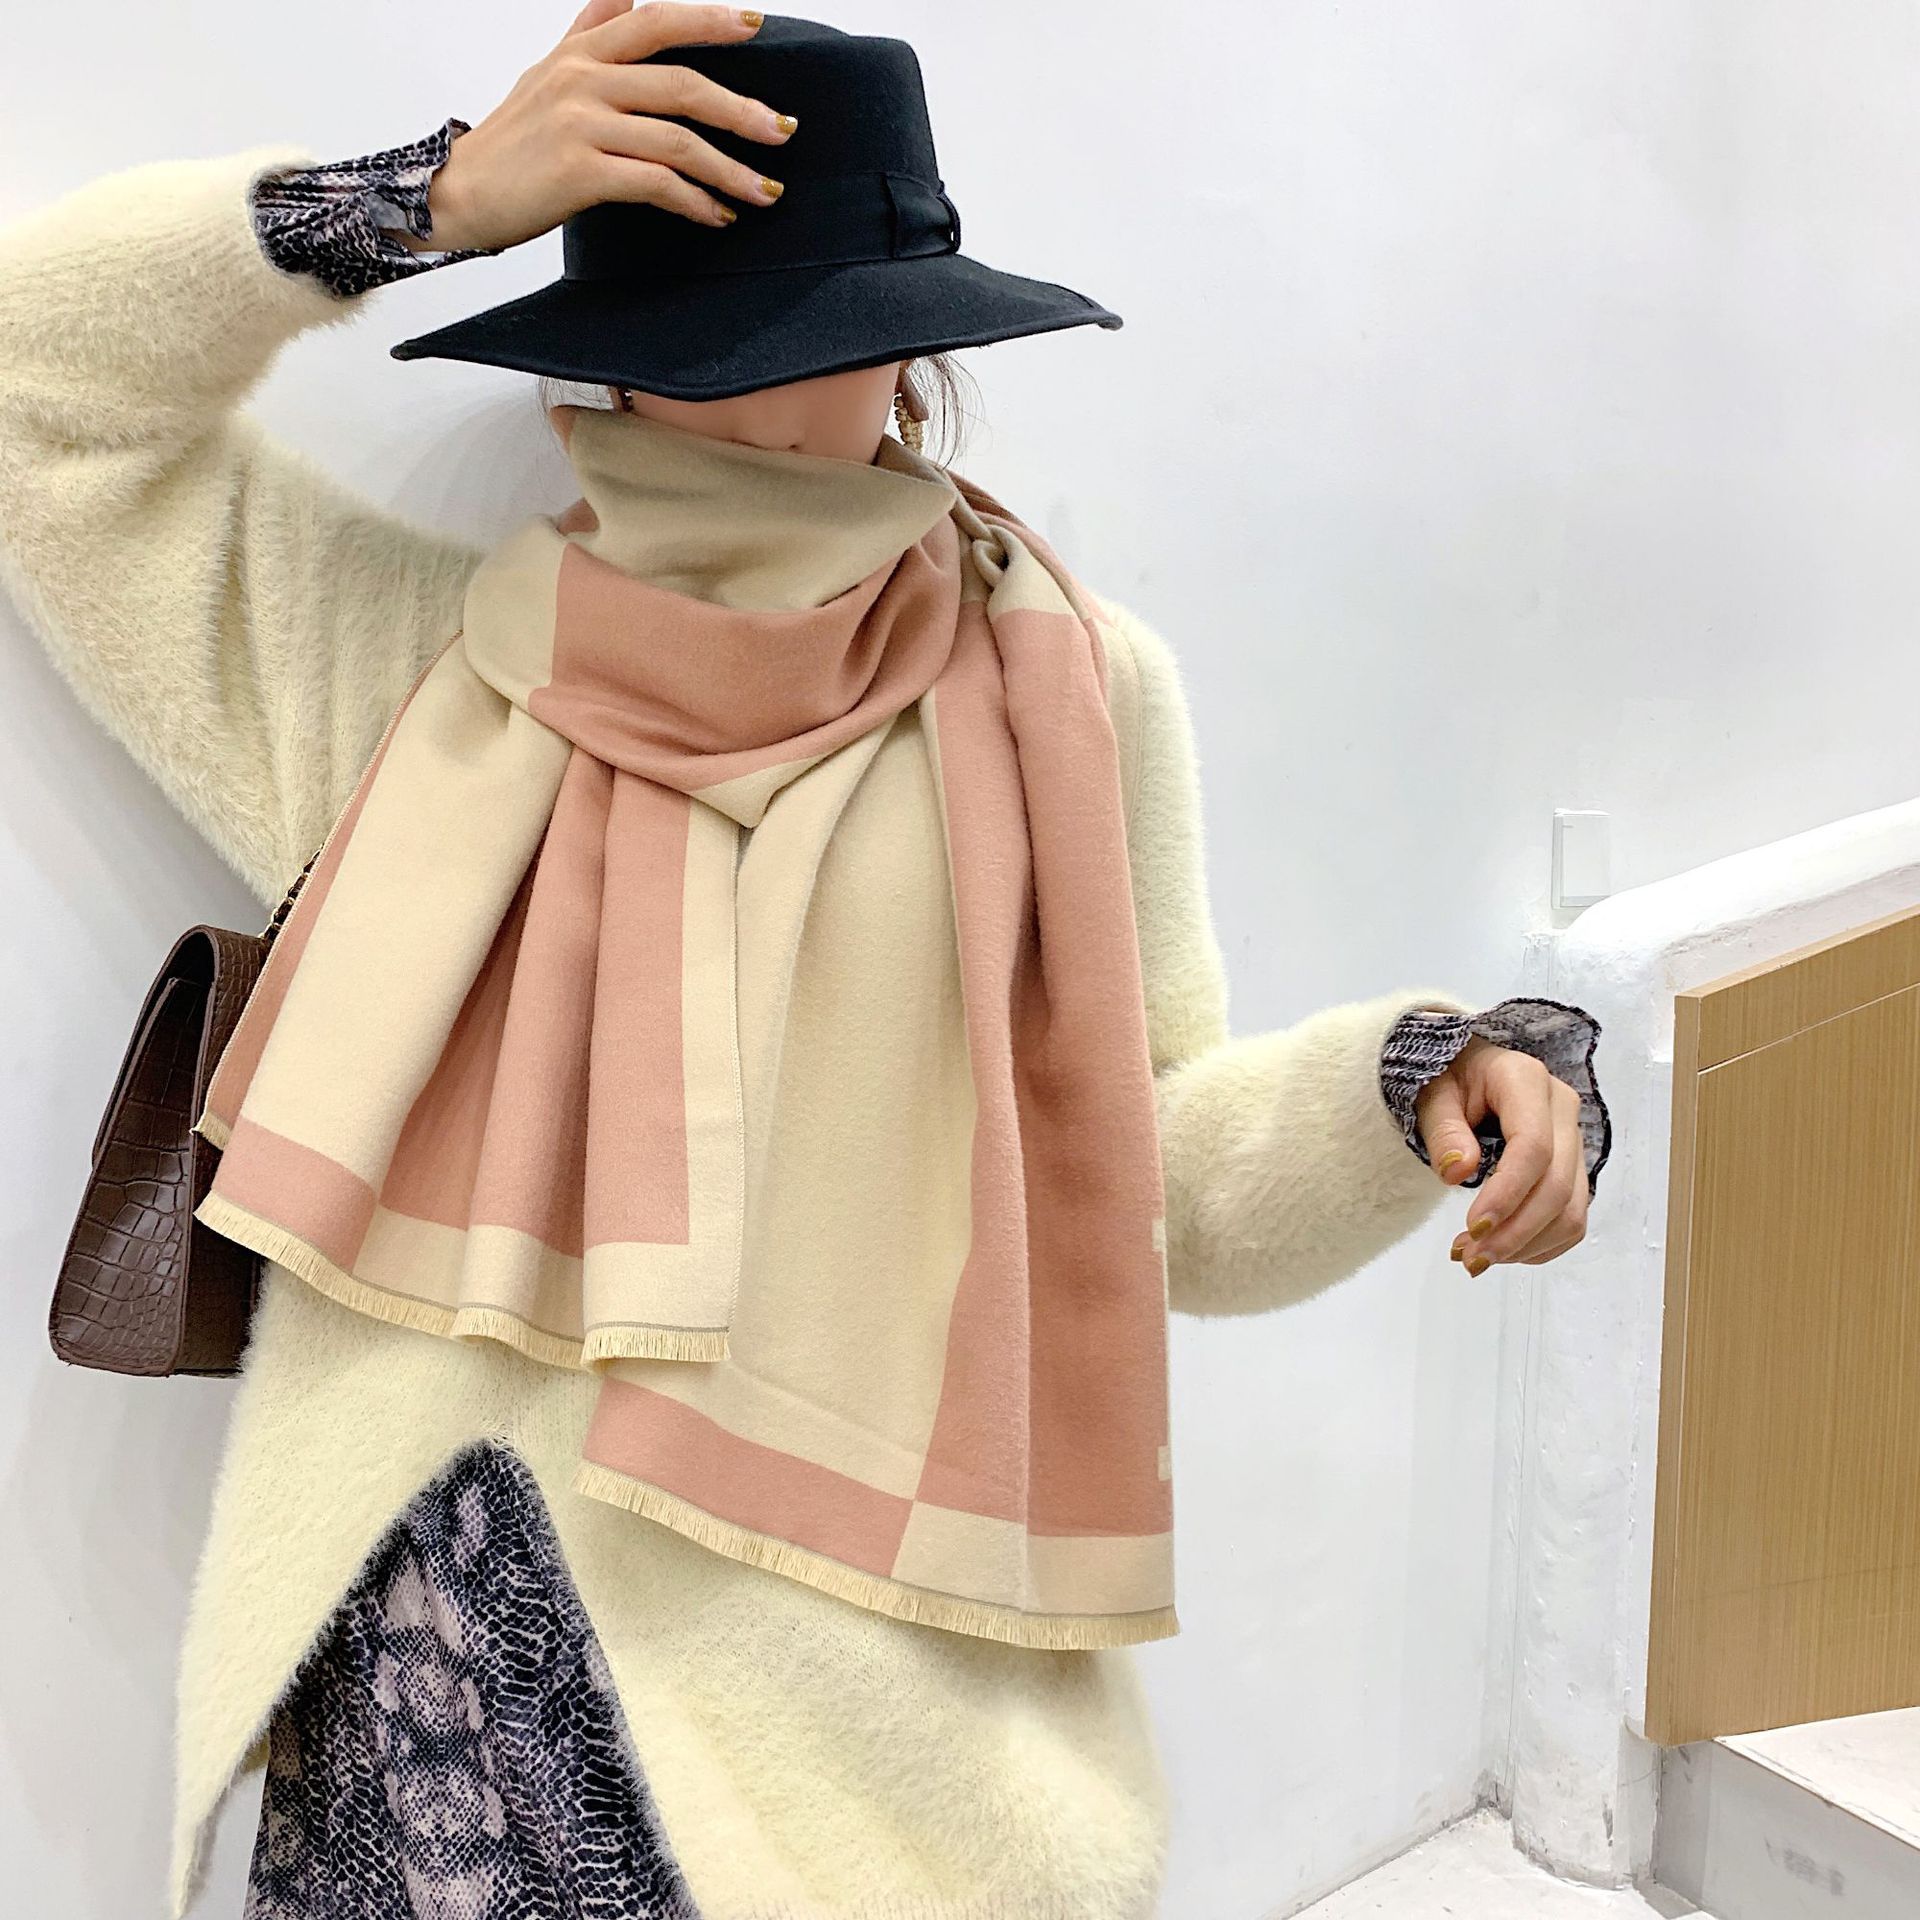 scarf designer scarf cashmere Wraps Warm Soft Scarves for Women Autumn Winter Long Shawls Camouflage Animal Plaid Black Orange Khaki Beige pink Letter Large wrap